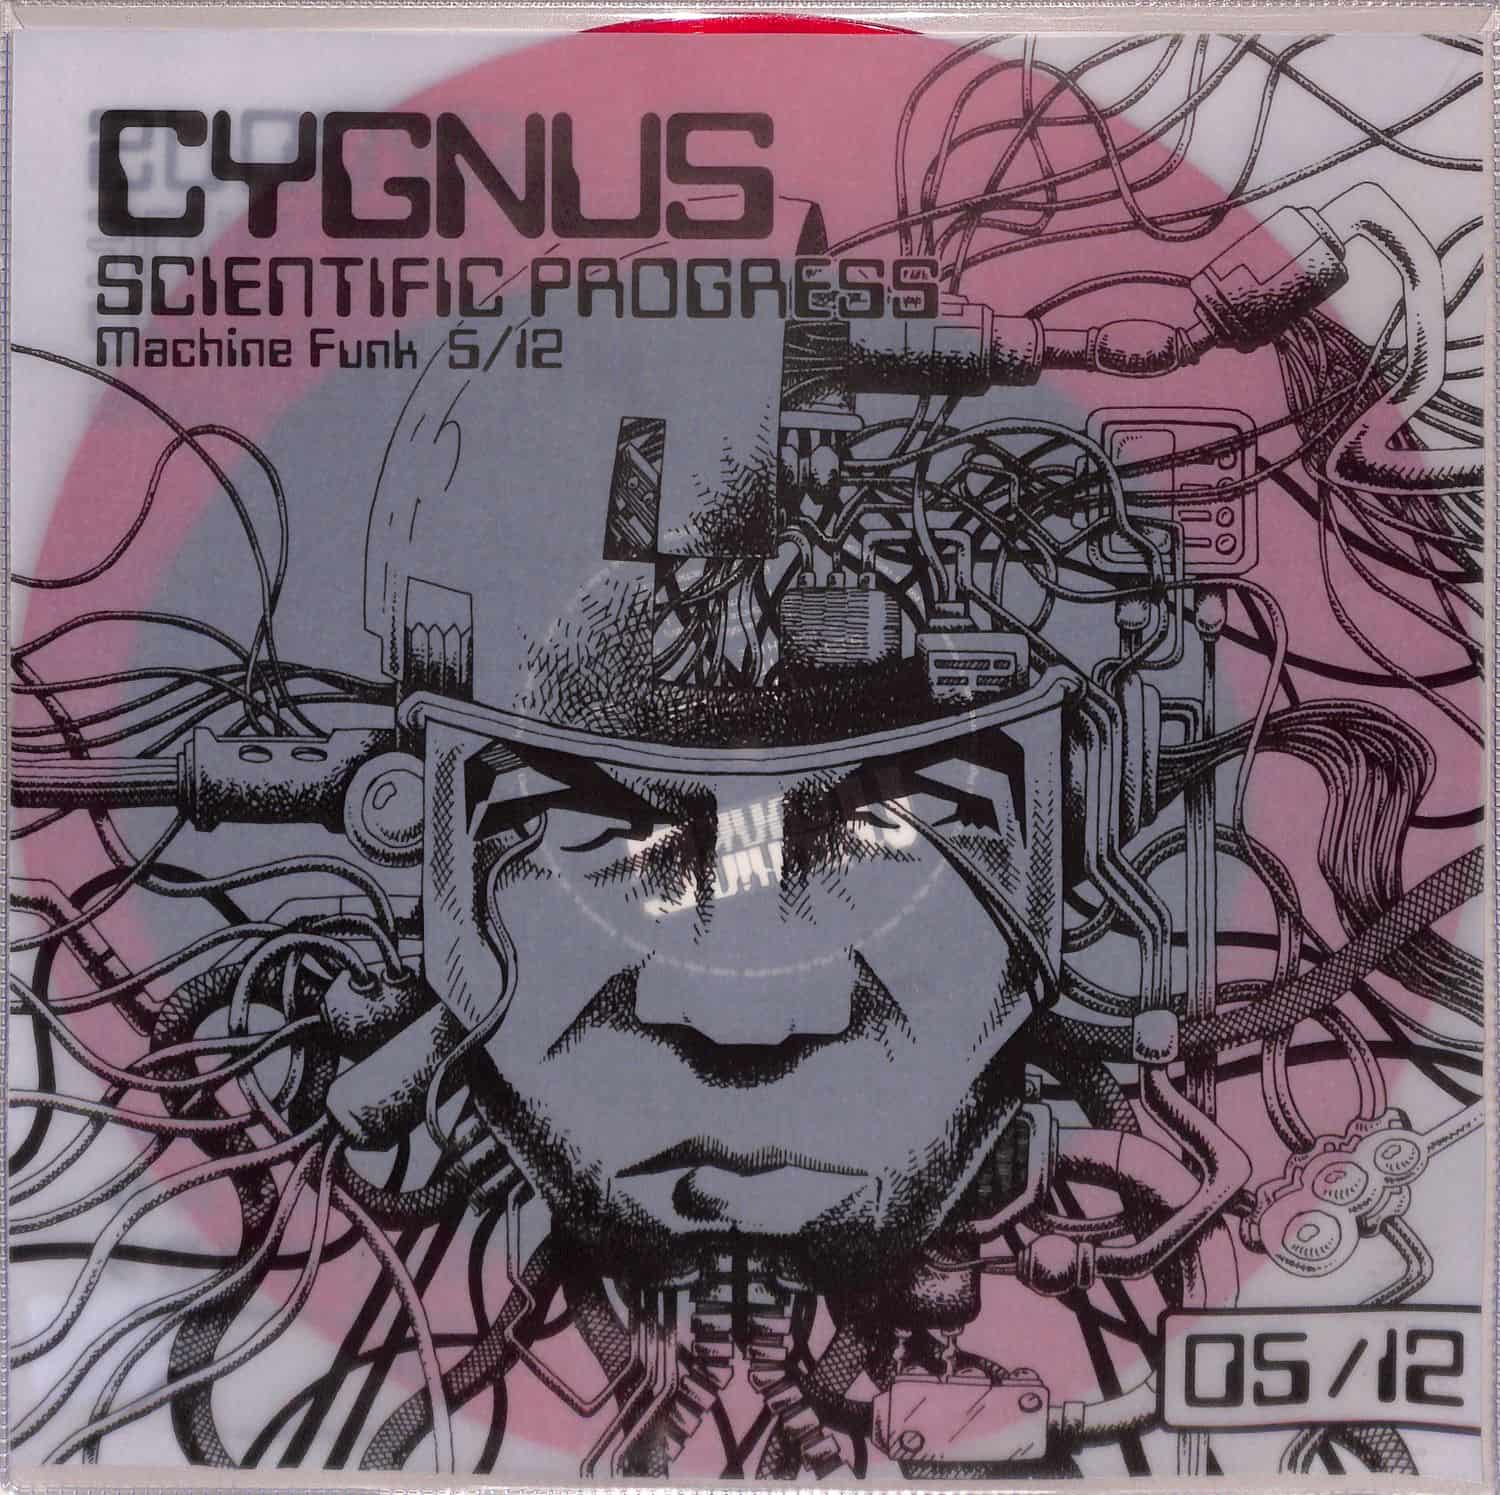 Cygnus - MACHINE FUNK 5/12 SCIENTIFIC PROGRESS EP